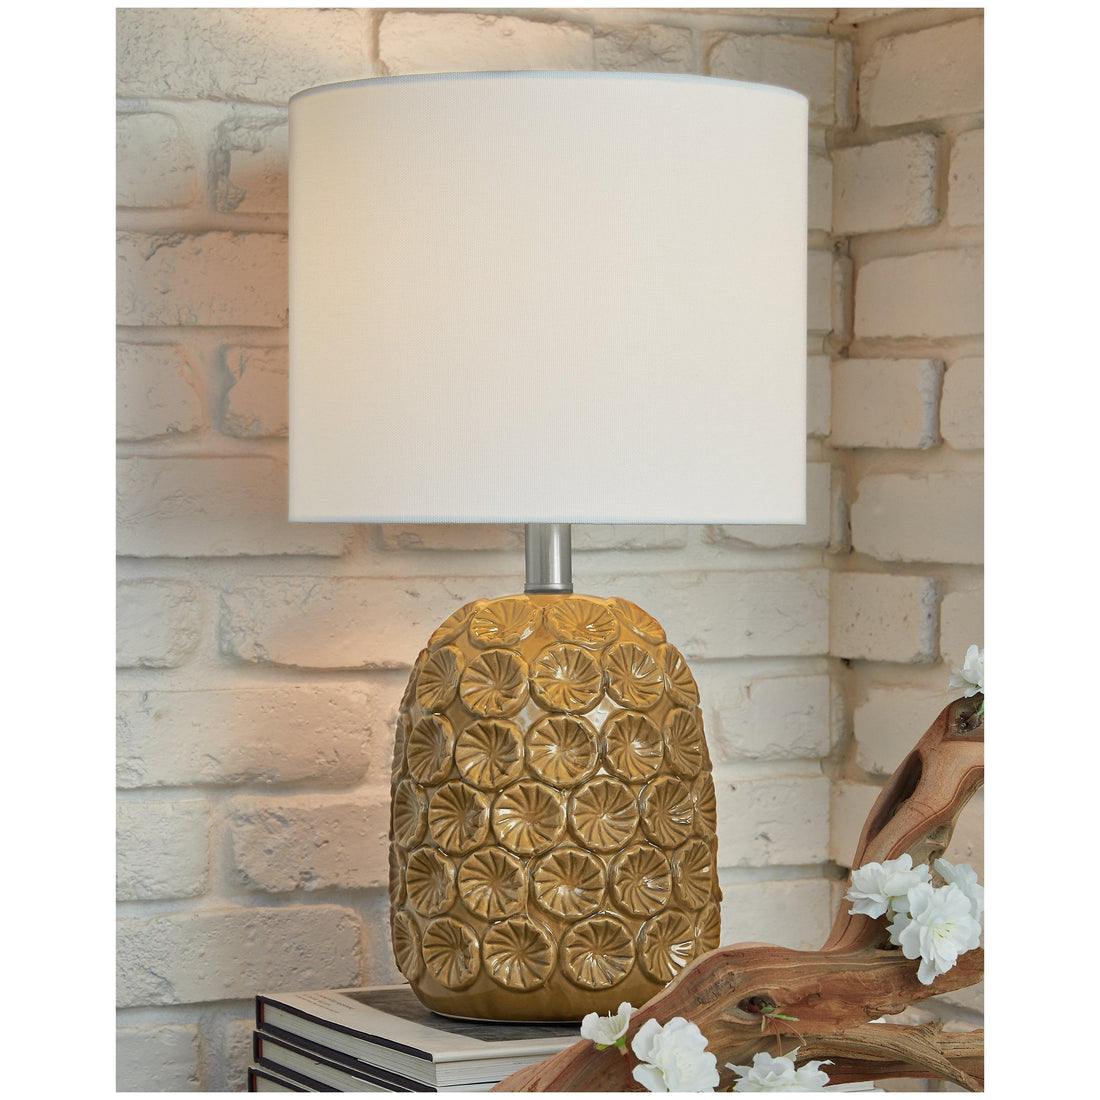 Moorbank Table Lamp Ash-L180084